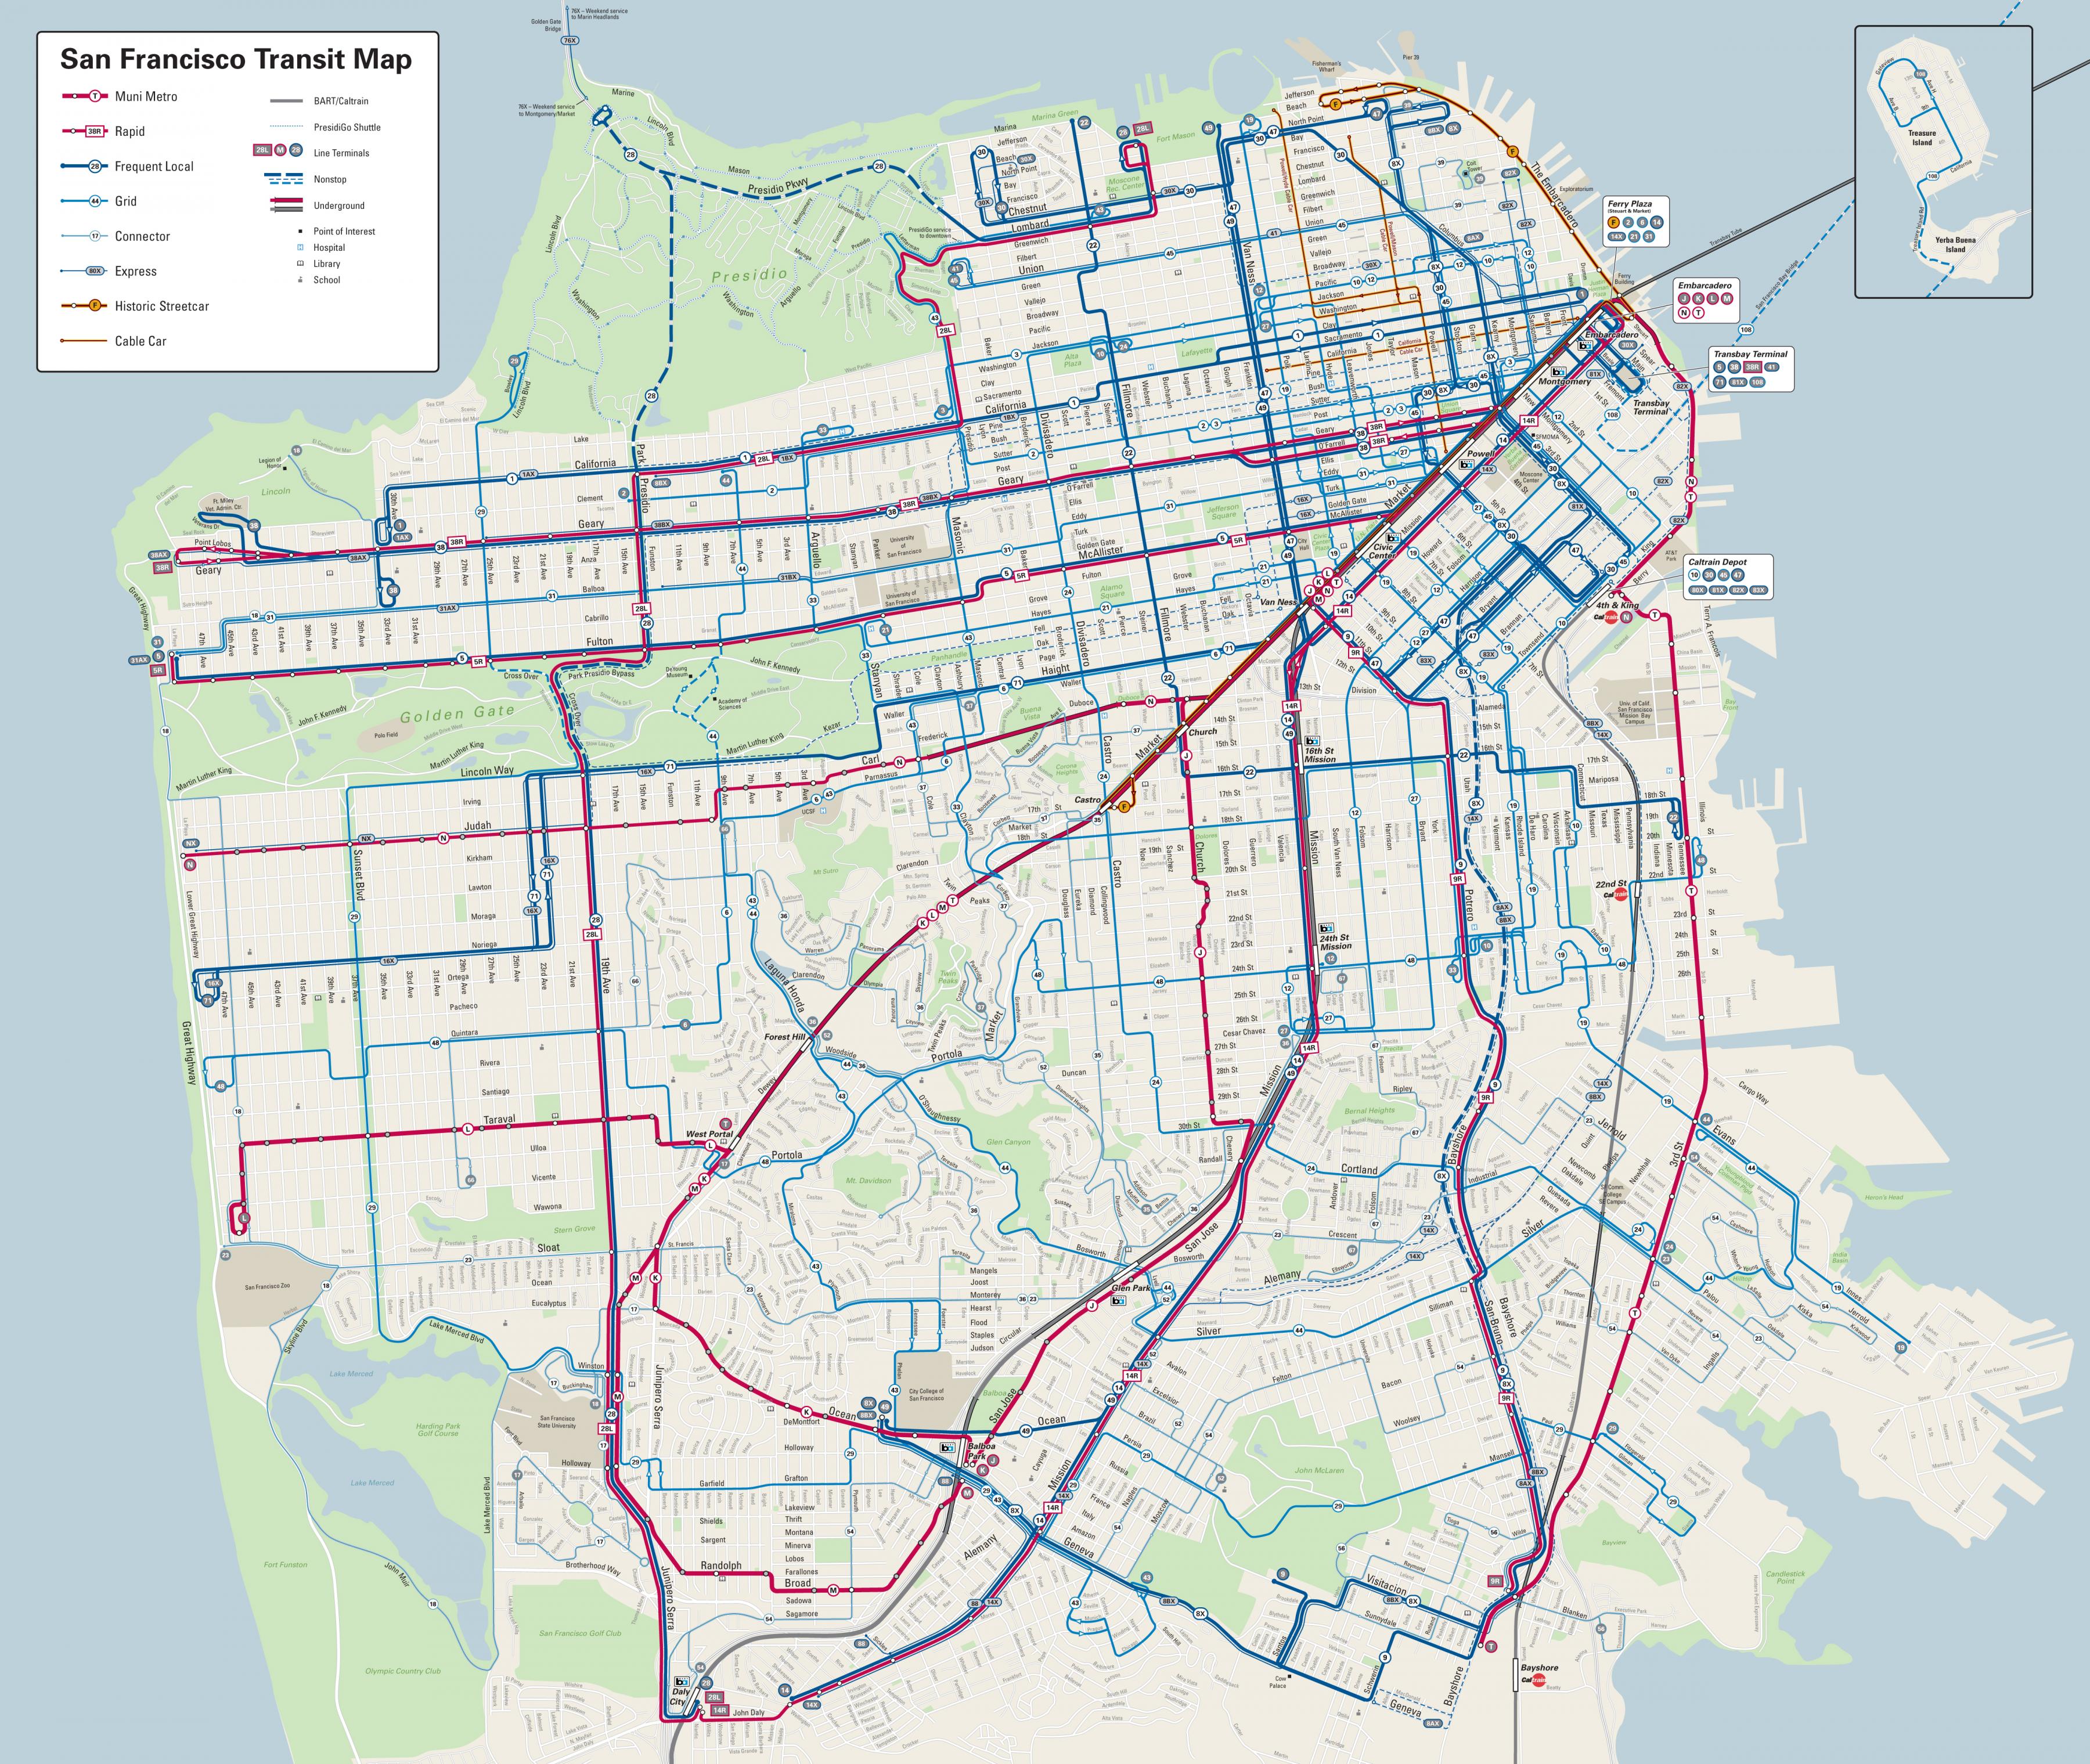 San Francisco bus map - San Francisco bus lines map (California - USA)